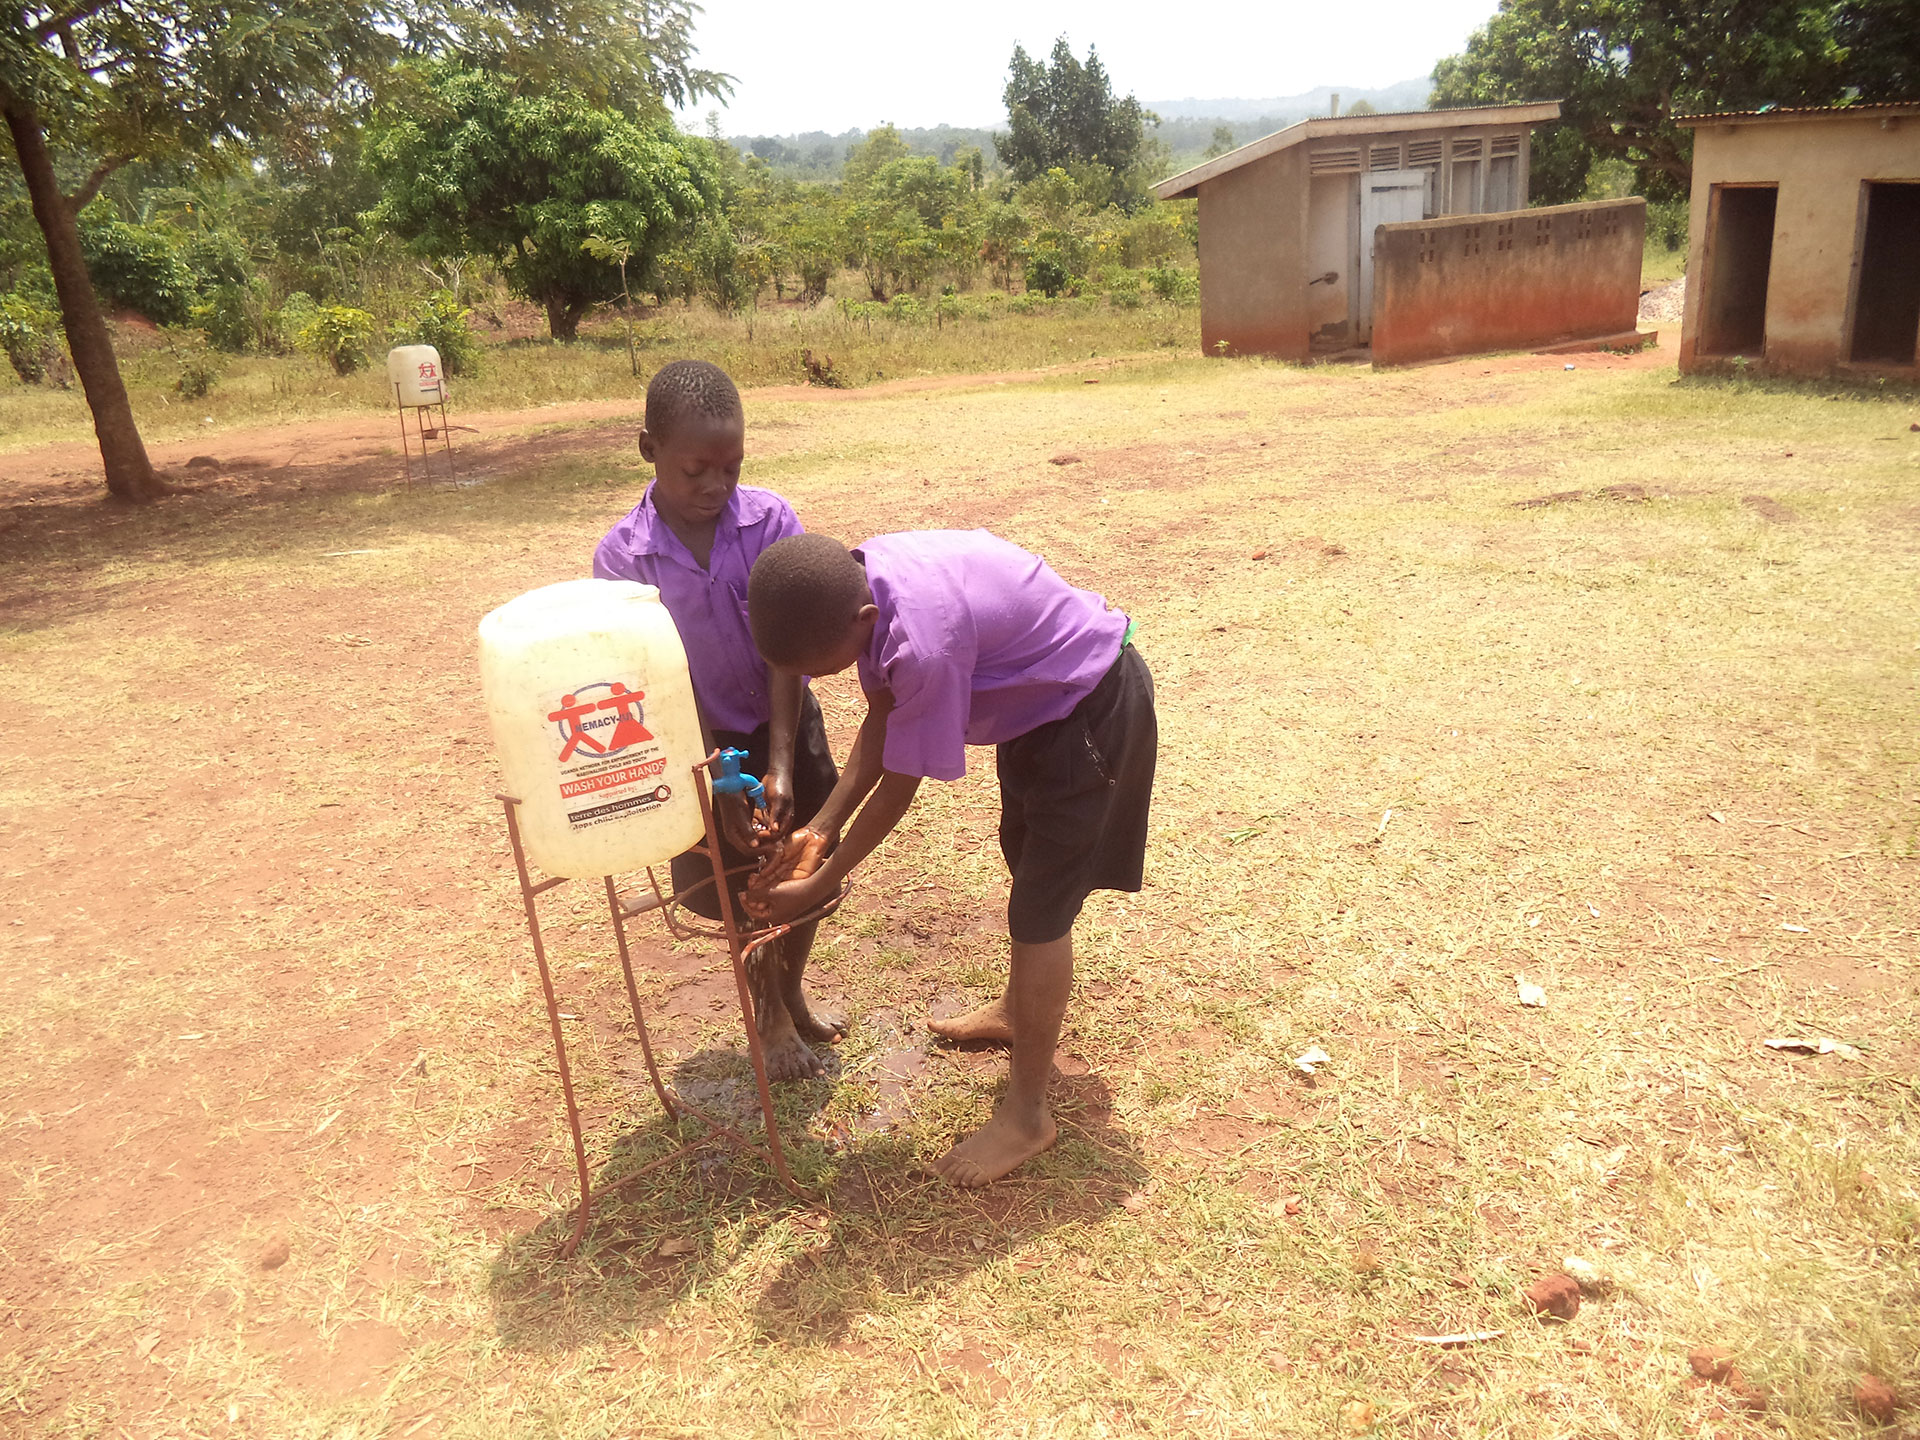 Children at Kiwagama PS Using a Hand Washing Facility provided by NEMACY-UGANDA